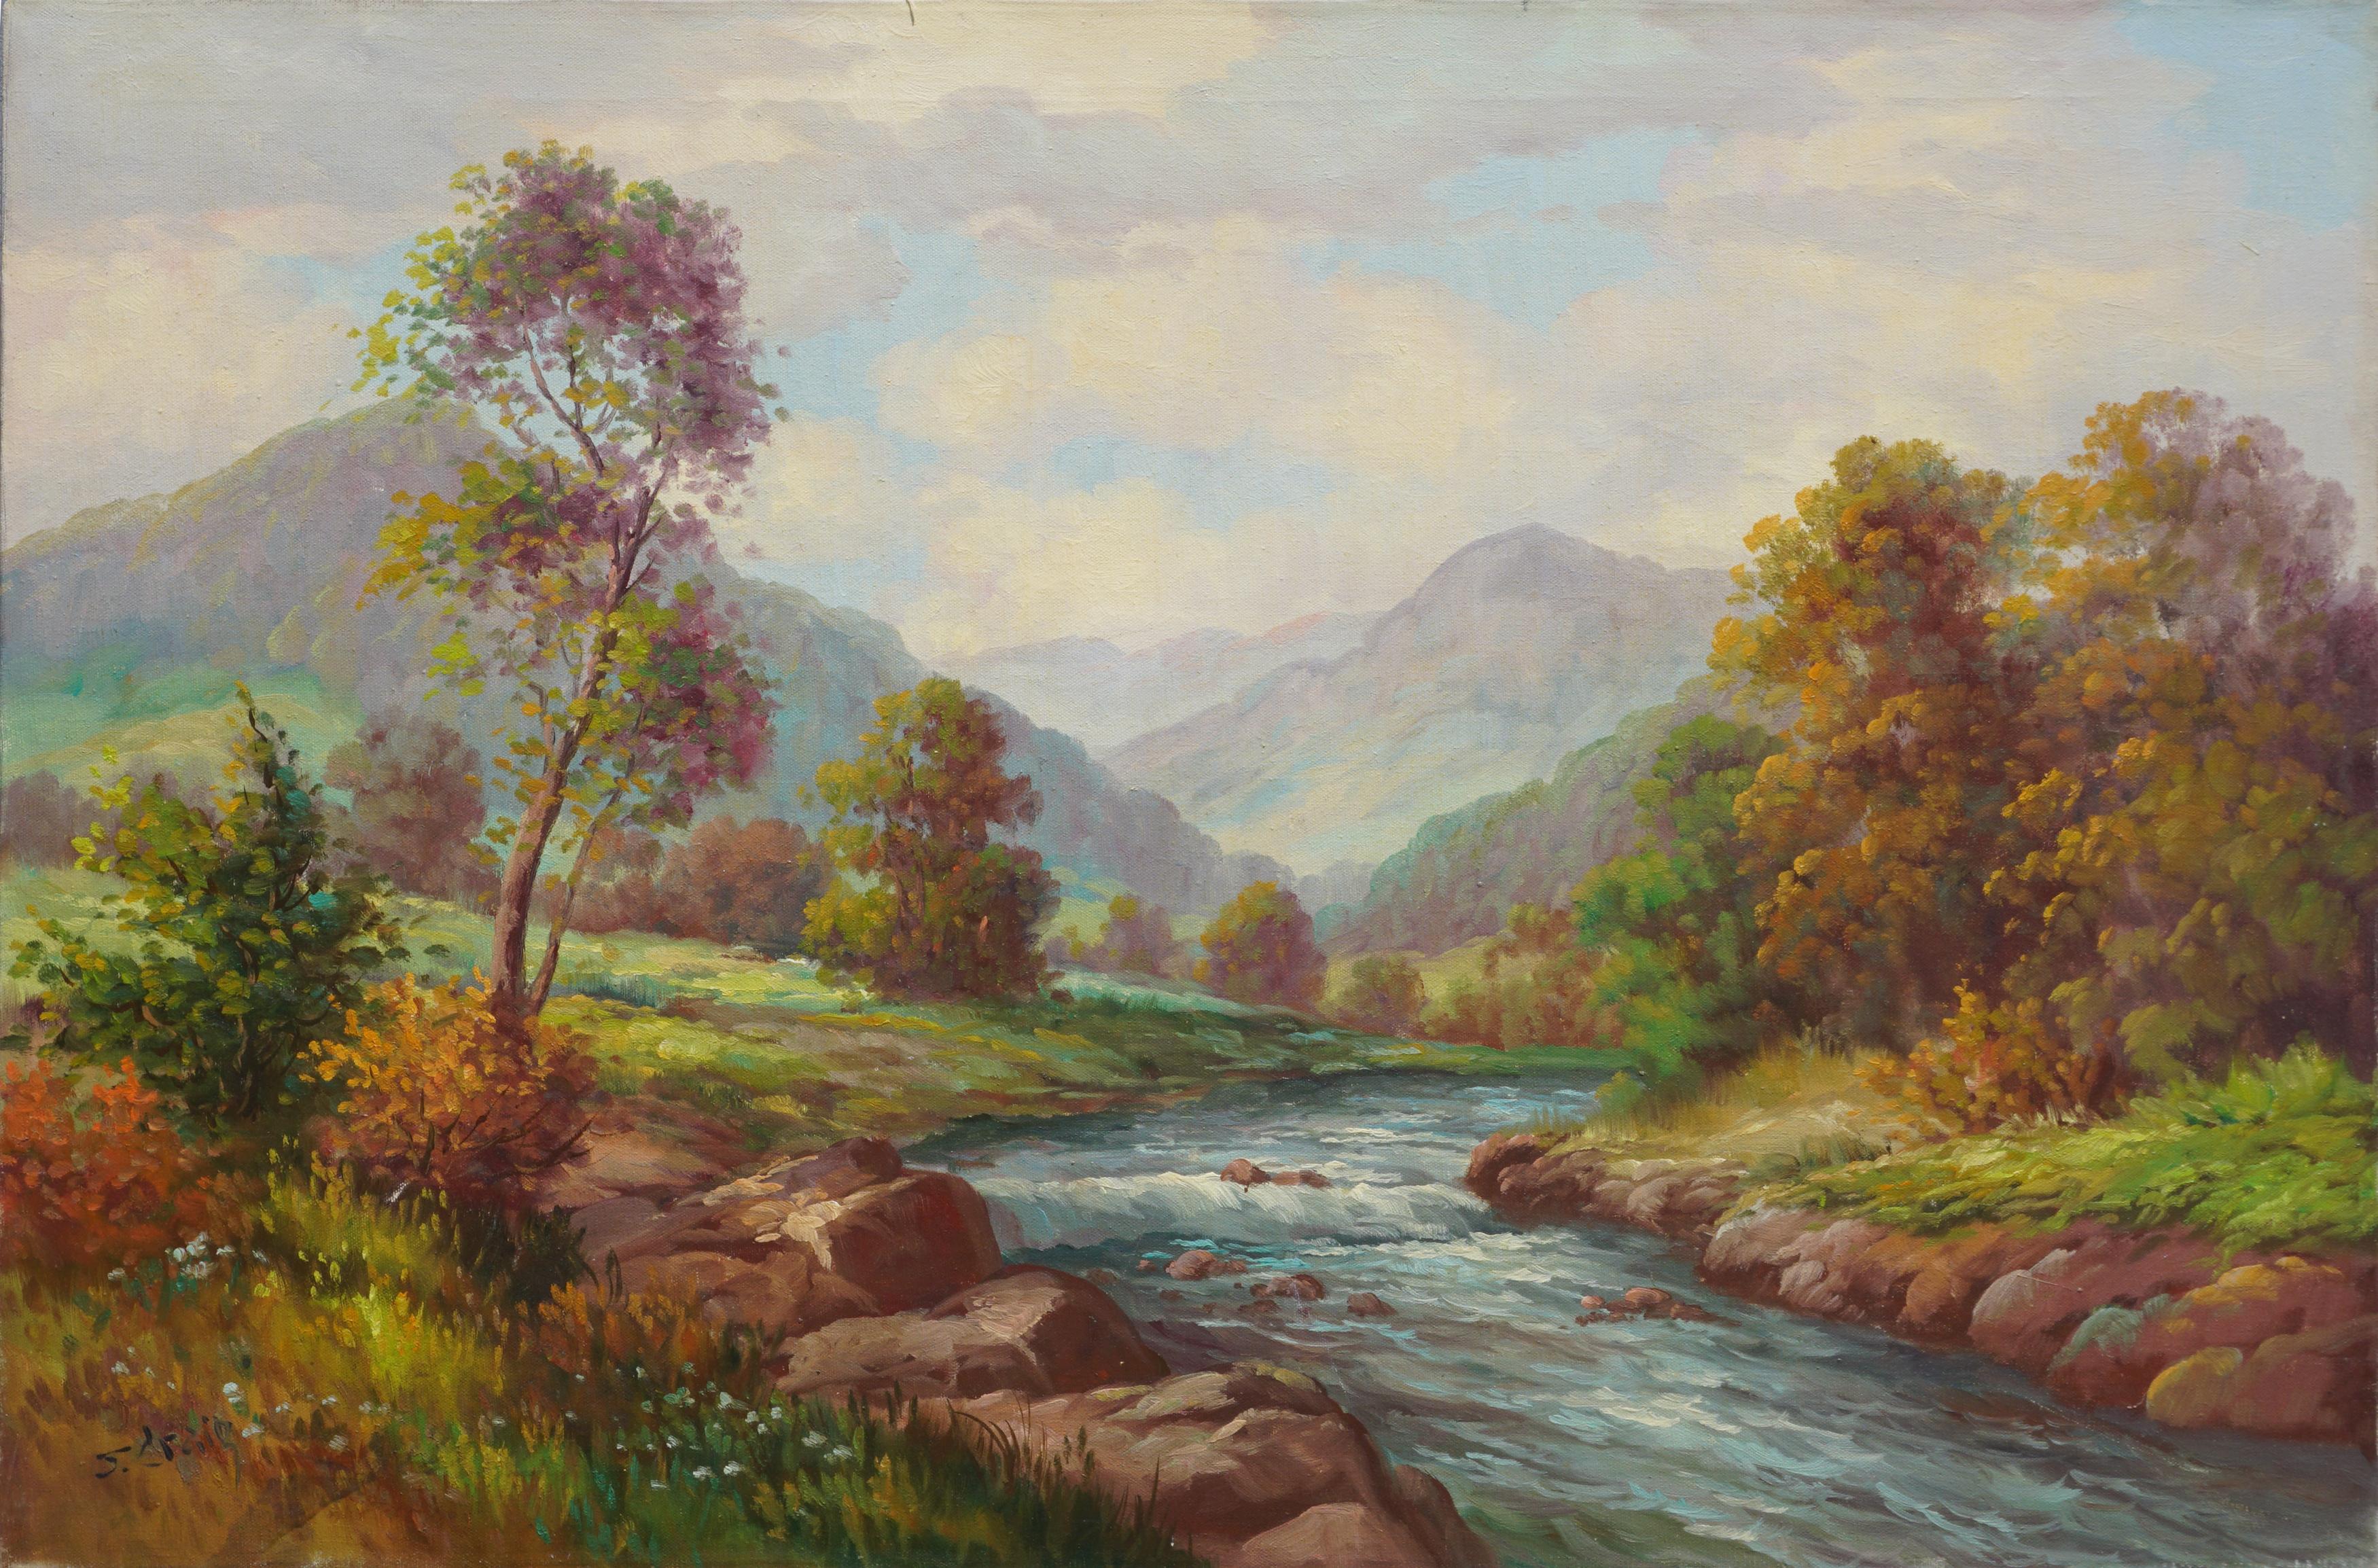 J Craig Landscape Painting - Late 19th Century Sierra Mountains & Stream Landscape